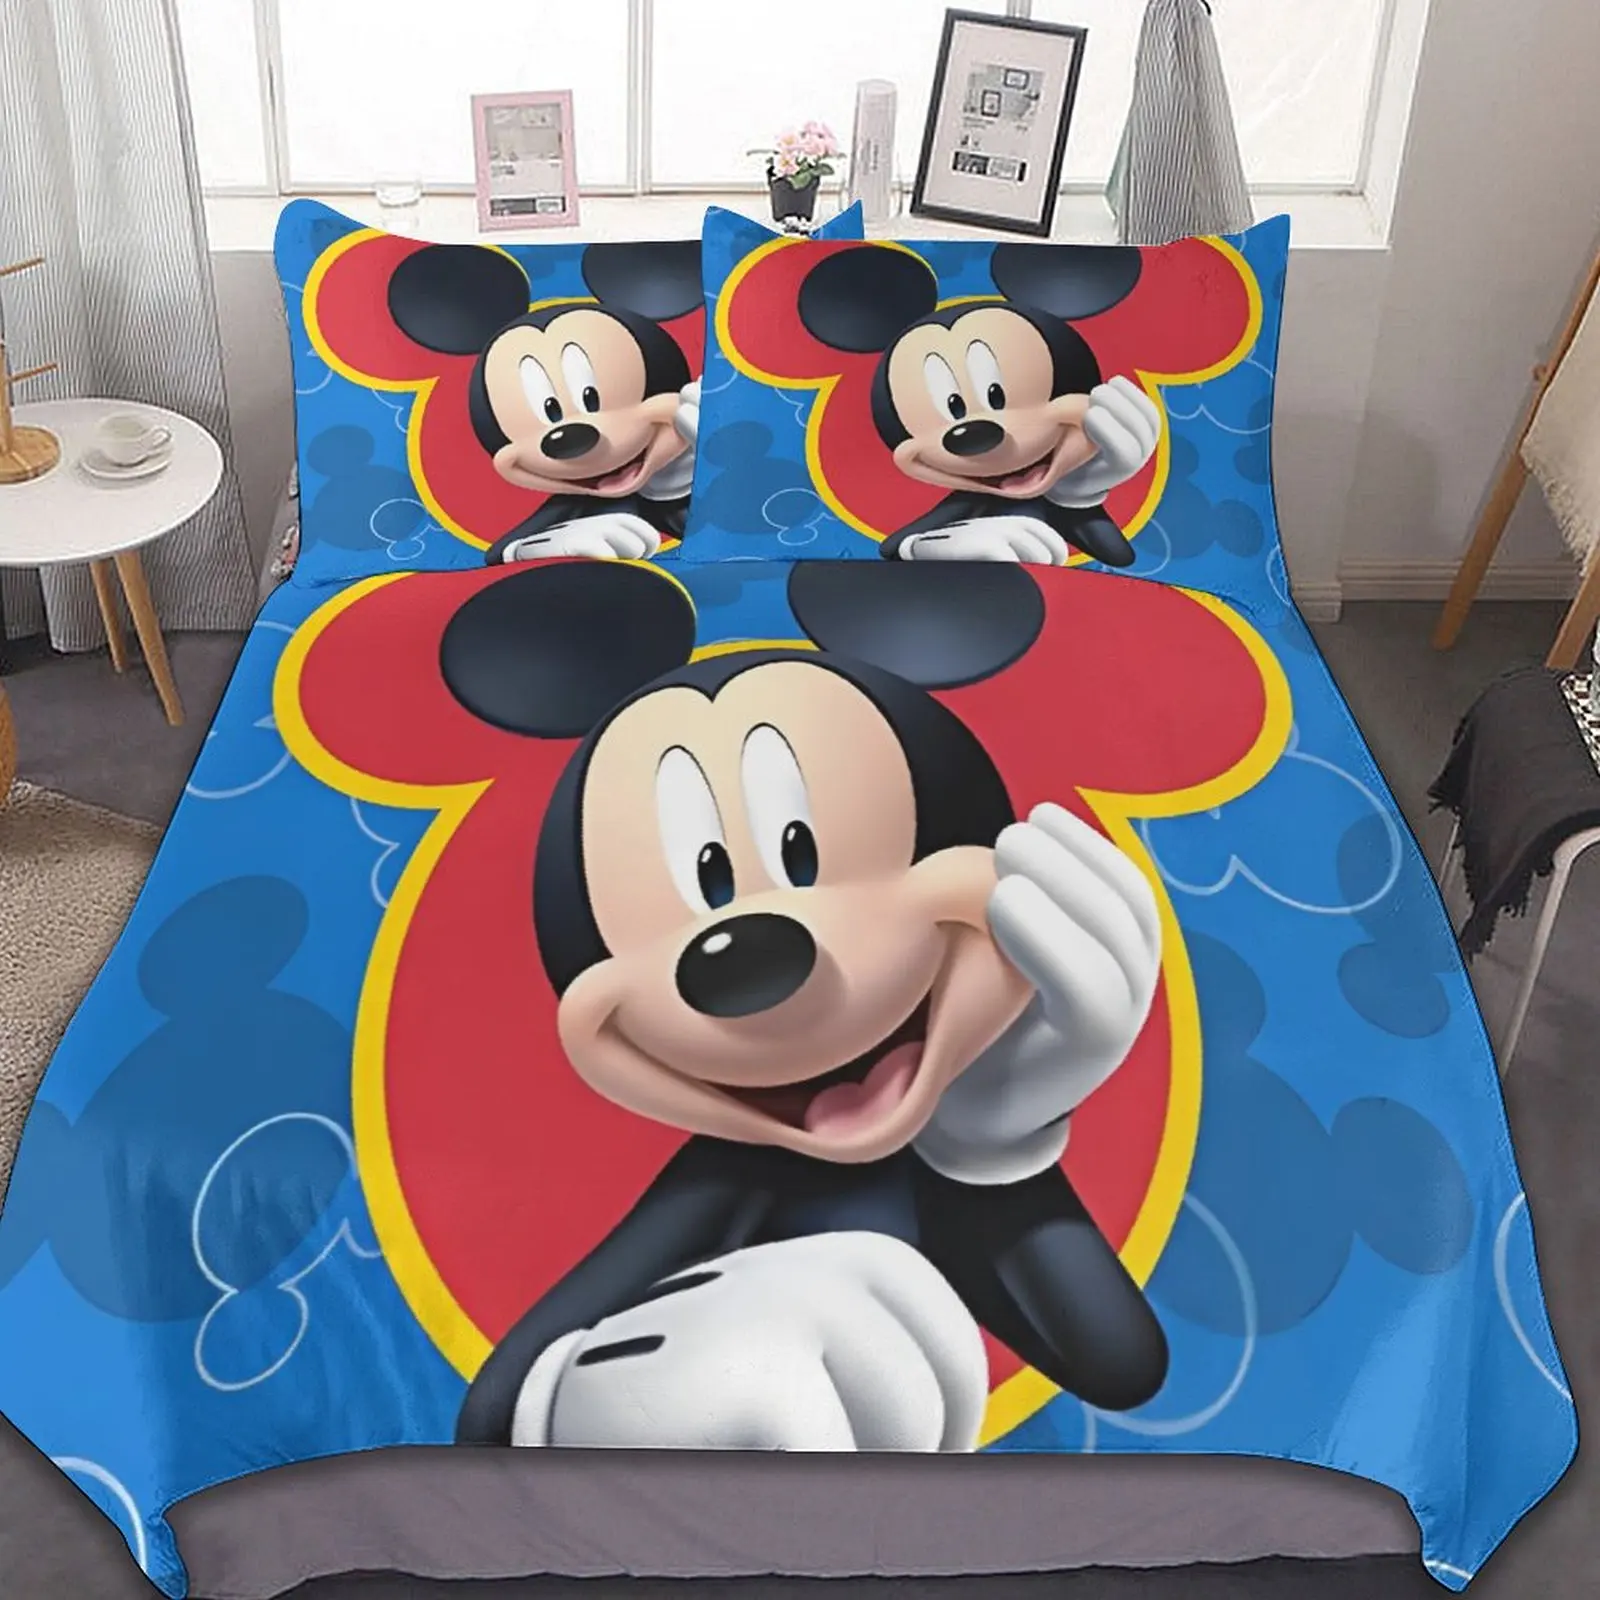 

Disney Mickey Minnie Mouse Bedding Set Quilt Duvet Cover Comforter Pillow Case Bedclothes Children Kid Boy Bed Bedroom Sets